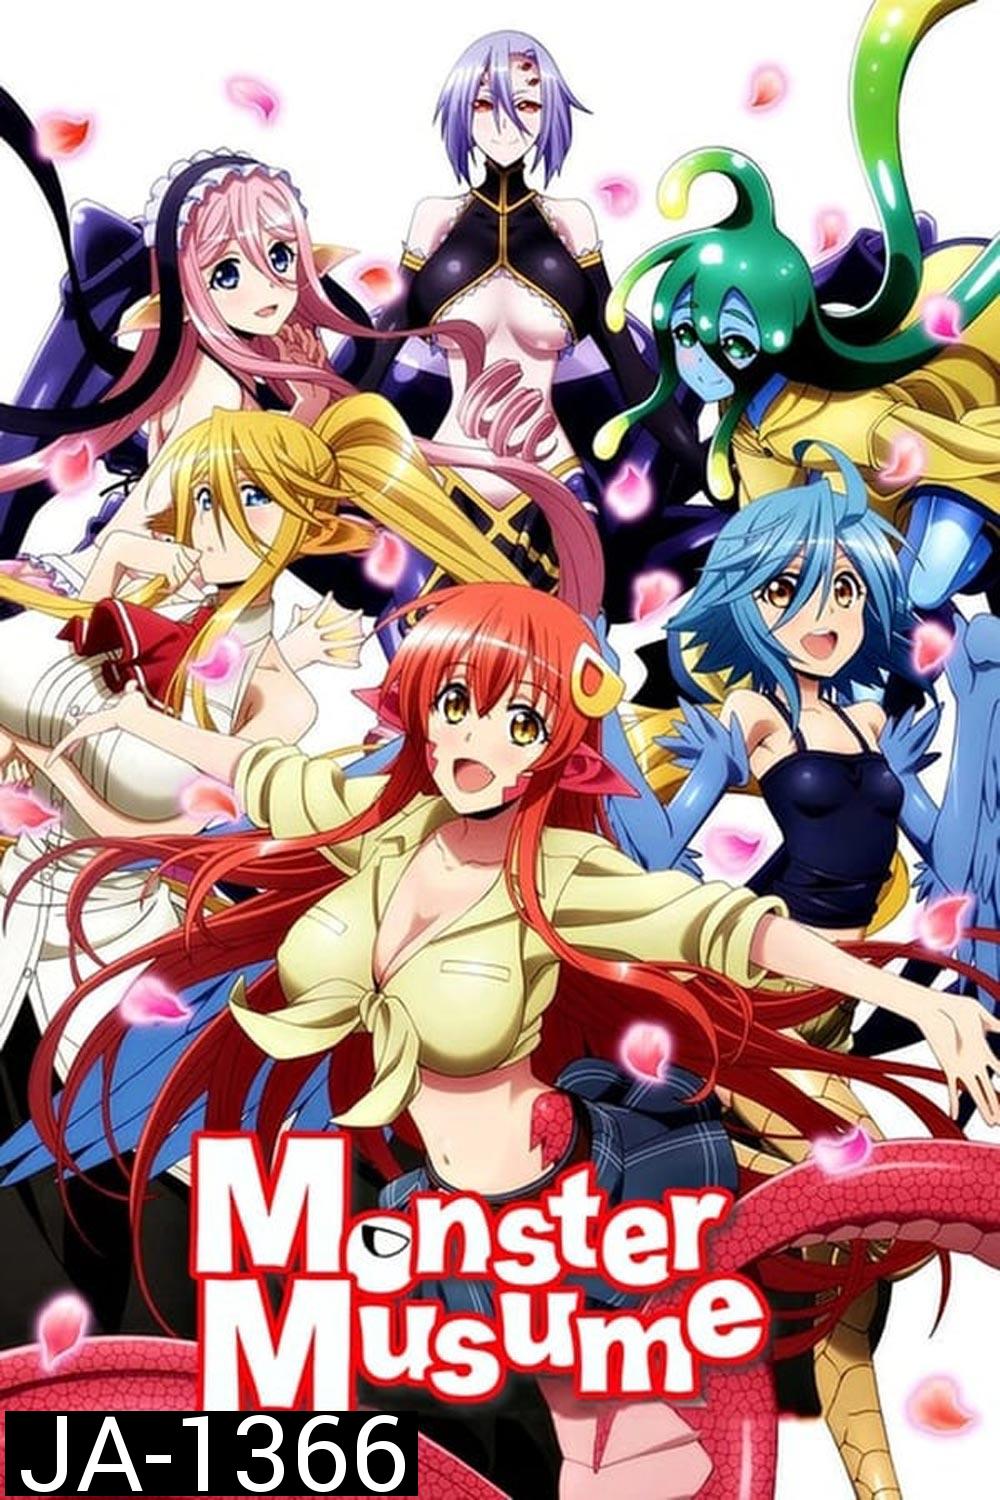 Monster Musume: Everyday Life with Monster Girls ชีวิตป่วนรักของสาวมอนสเตอร์ (2015)